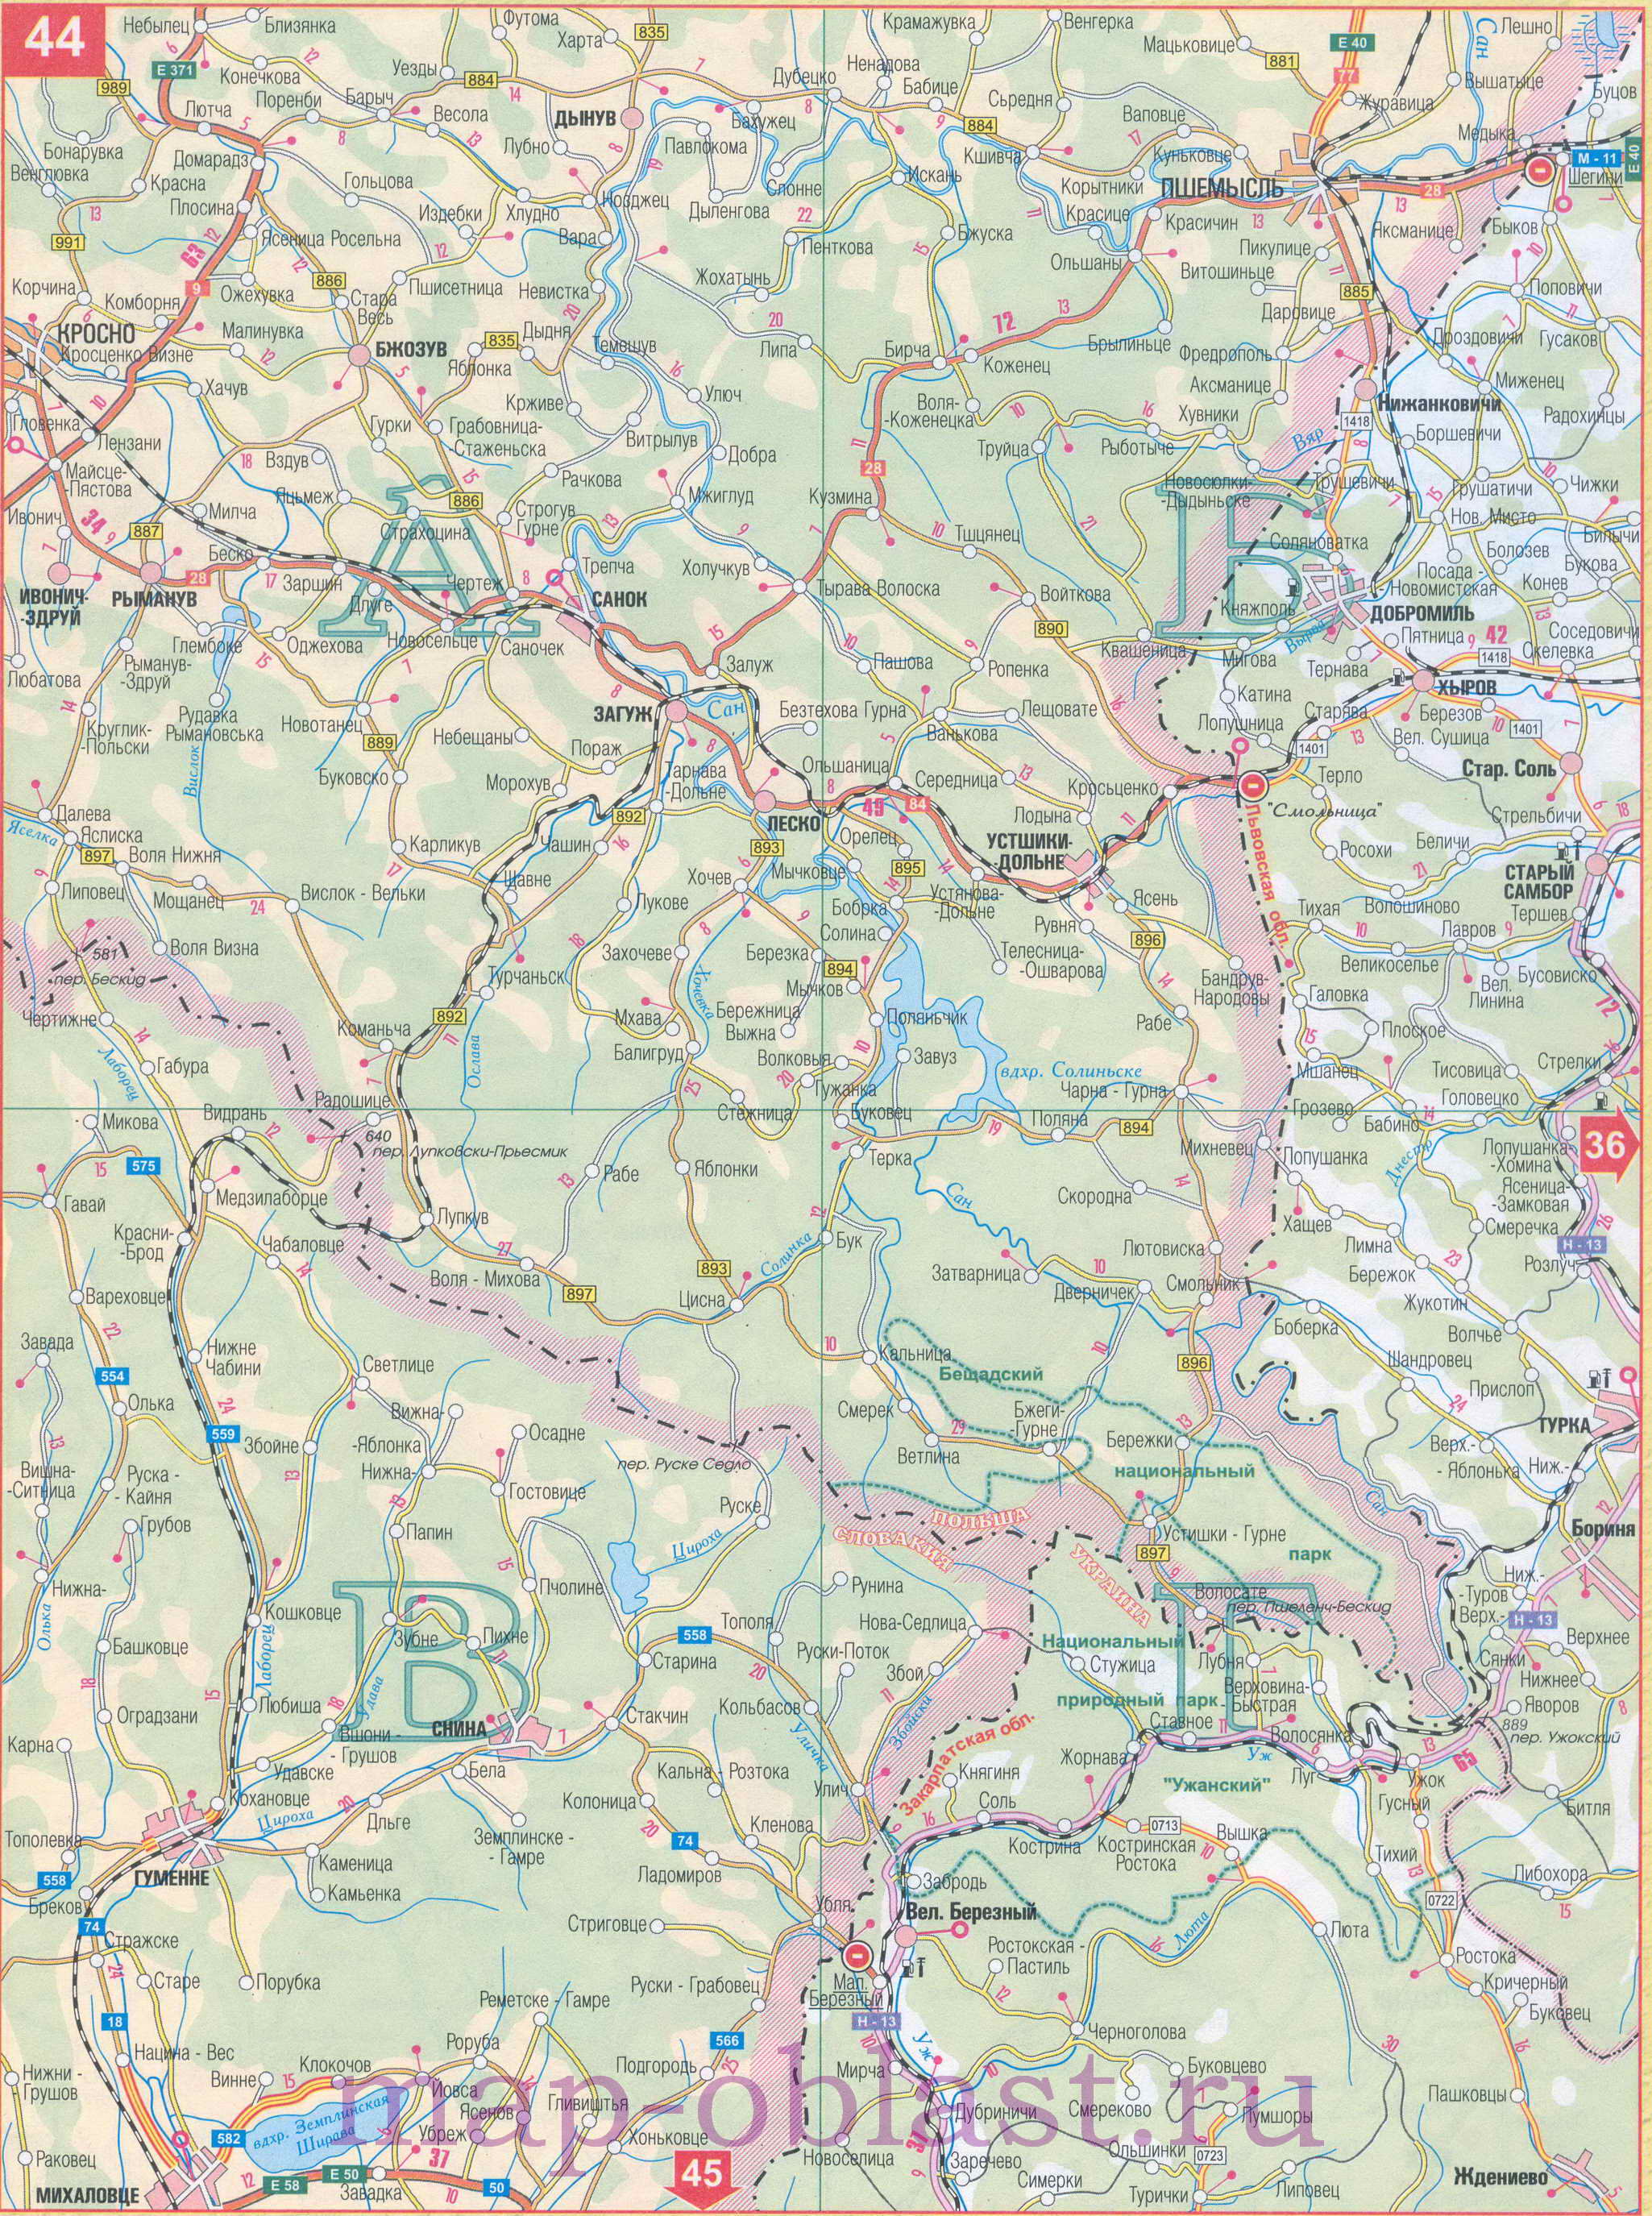 Карта дорог запада Украины - Закарпатская область. Подробная автомобильная карта Закарпатской области, A0 - 